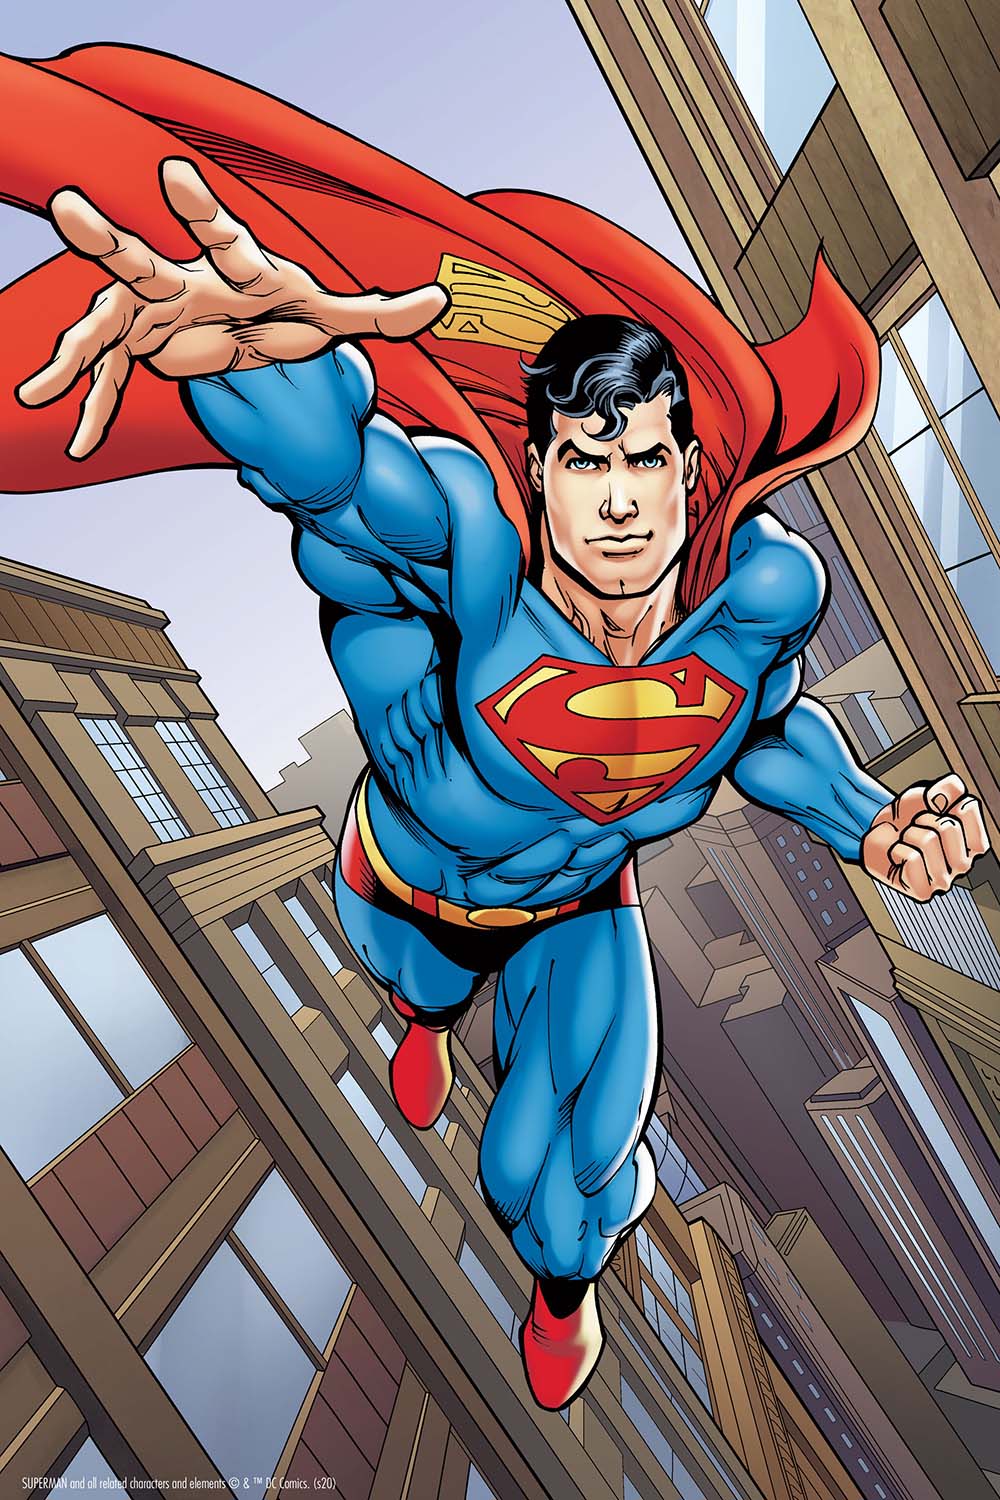 Superman DC Comics Movies & TV Jigsaw Puzzle